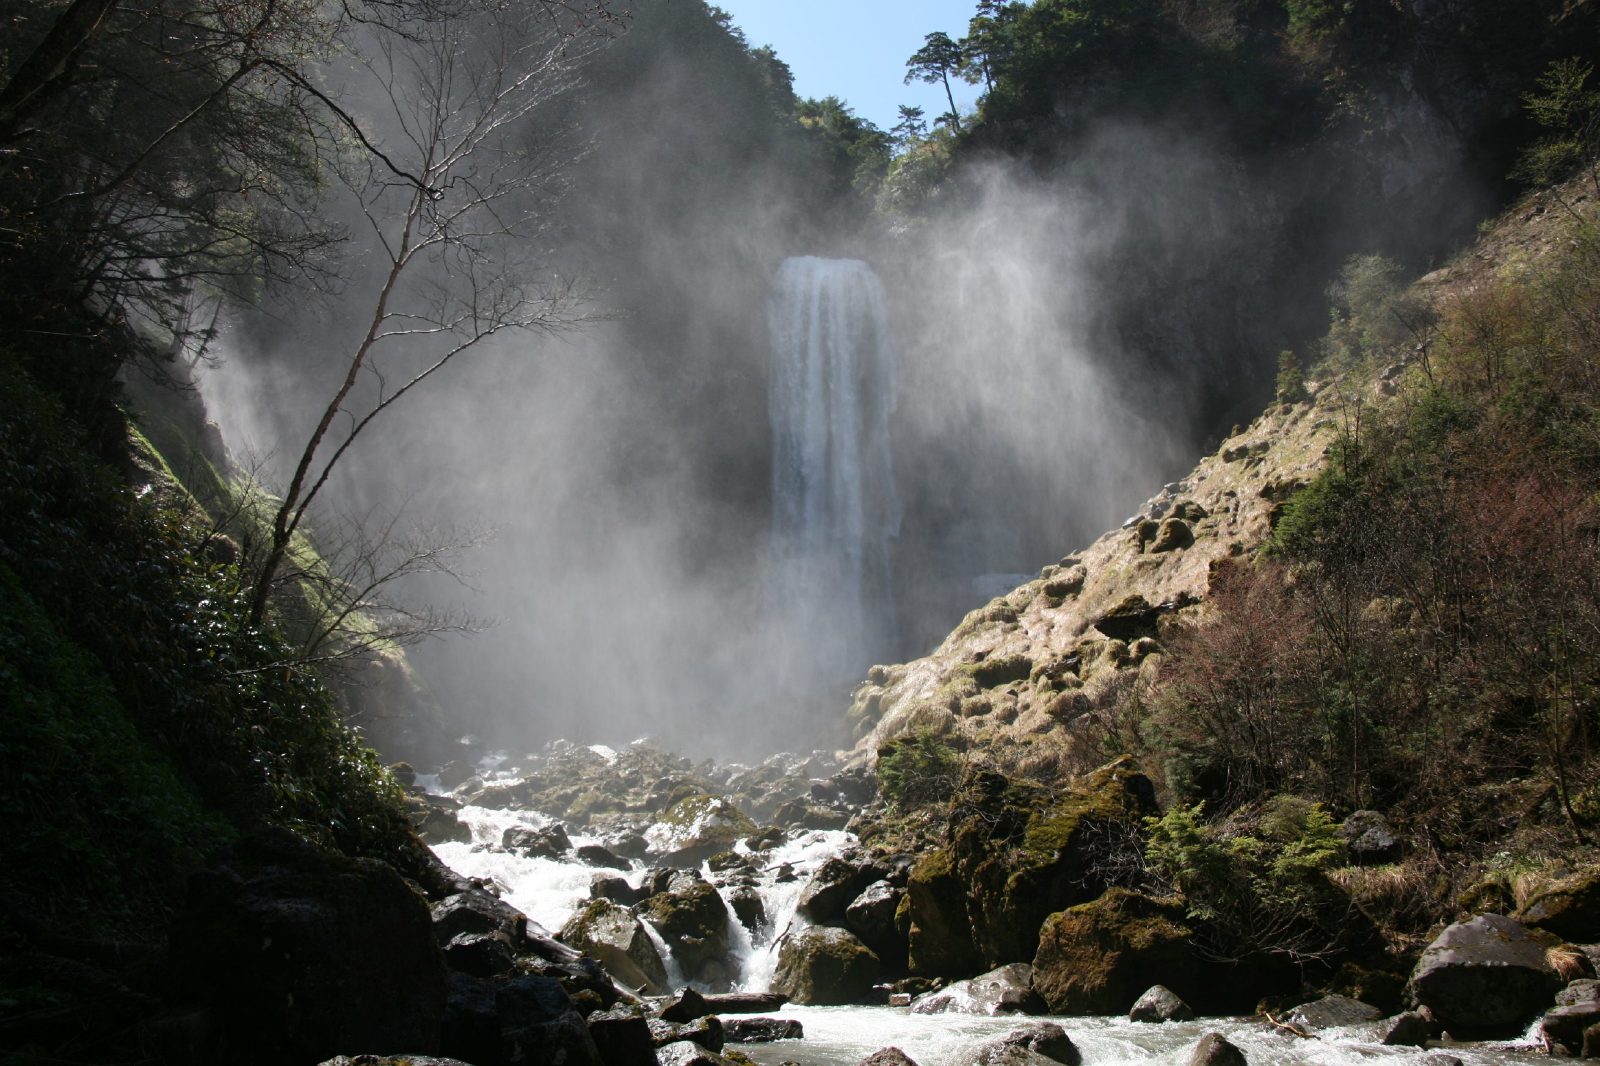 Hirayu falls